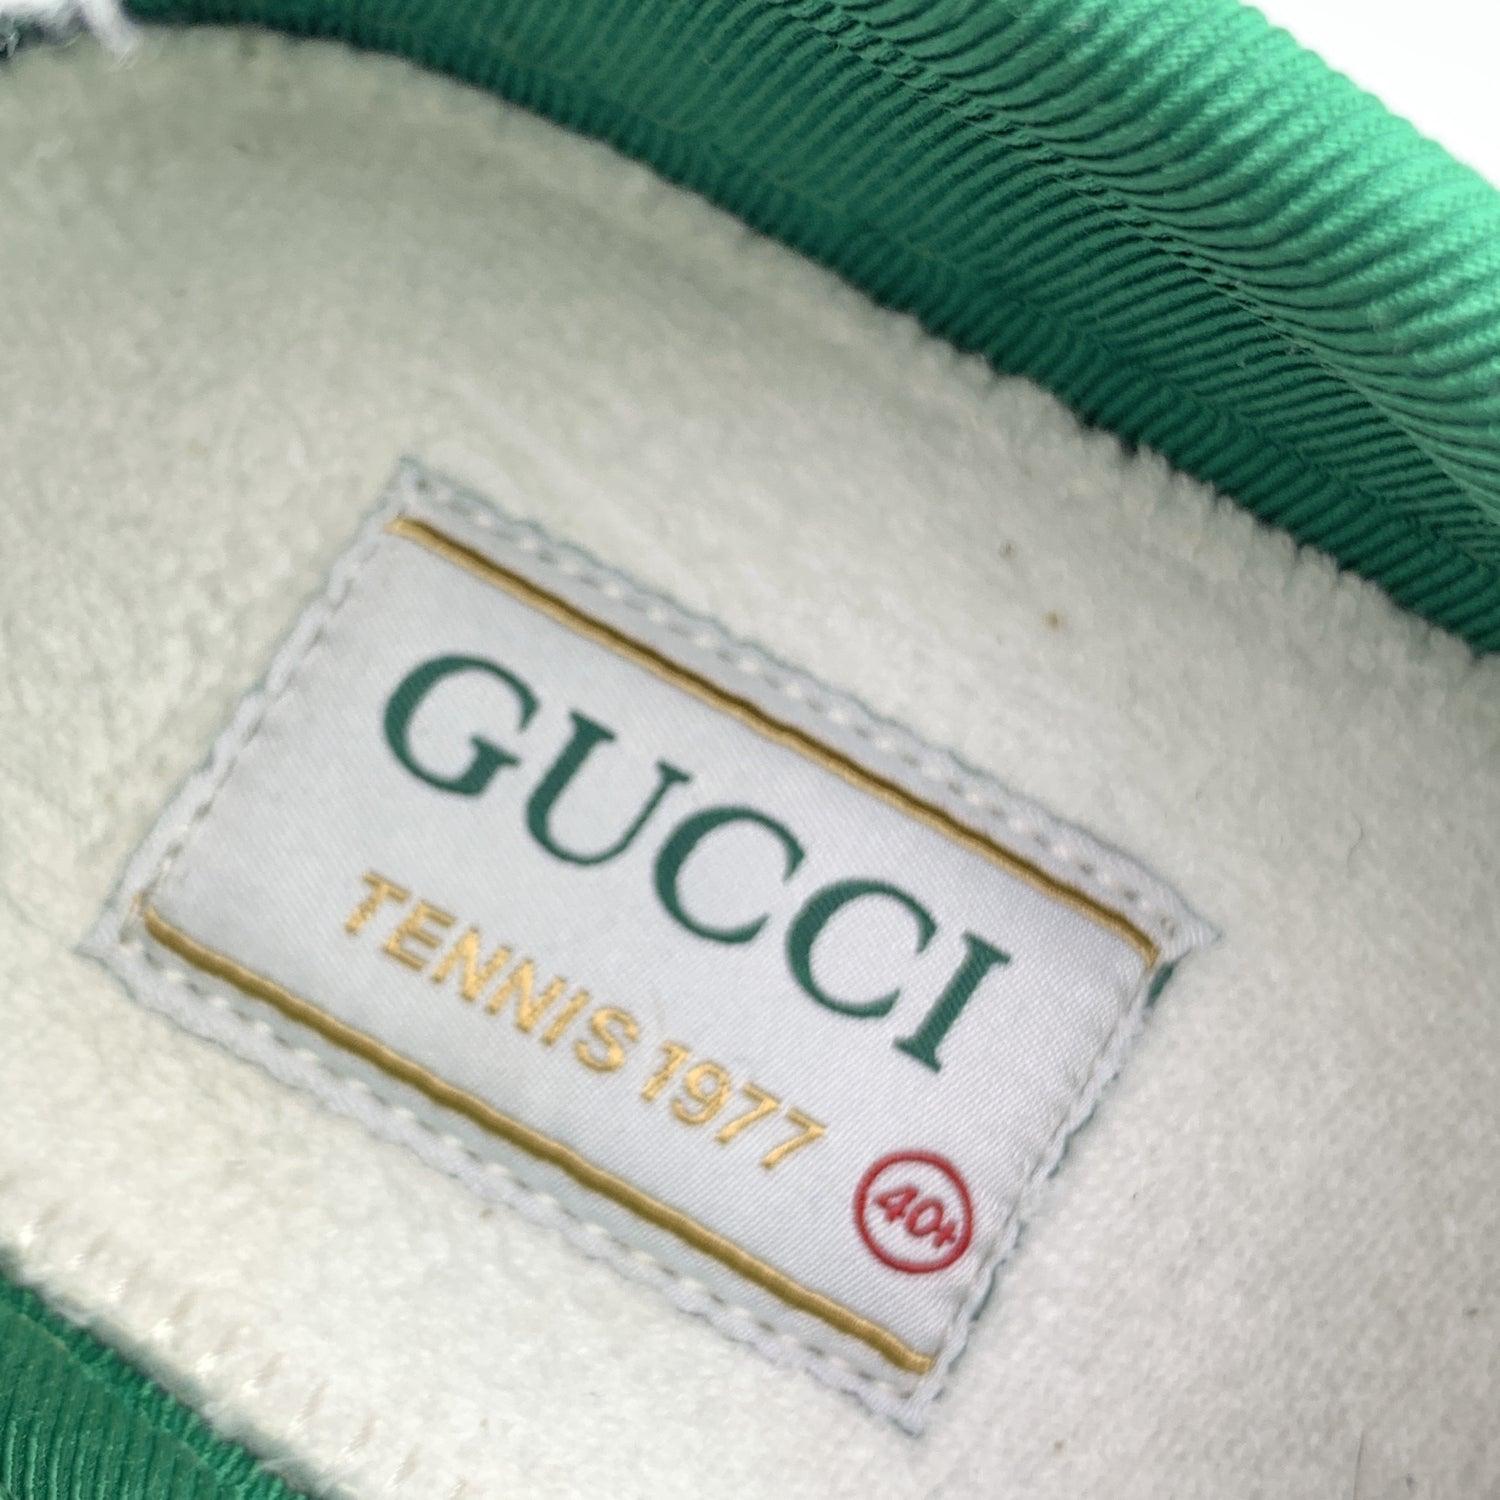 Gucci Black Floral Cotton Tennis 1977 Lace Up Sneakers Shoes Size 40.5 For Sale 2